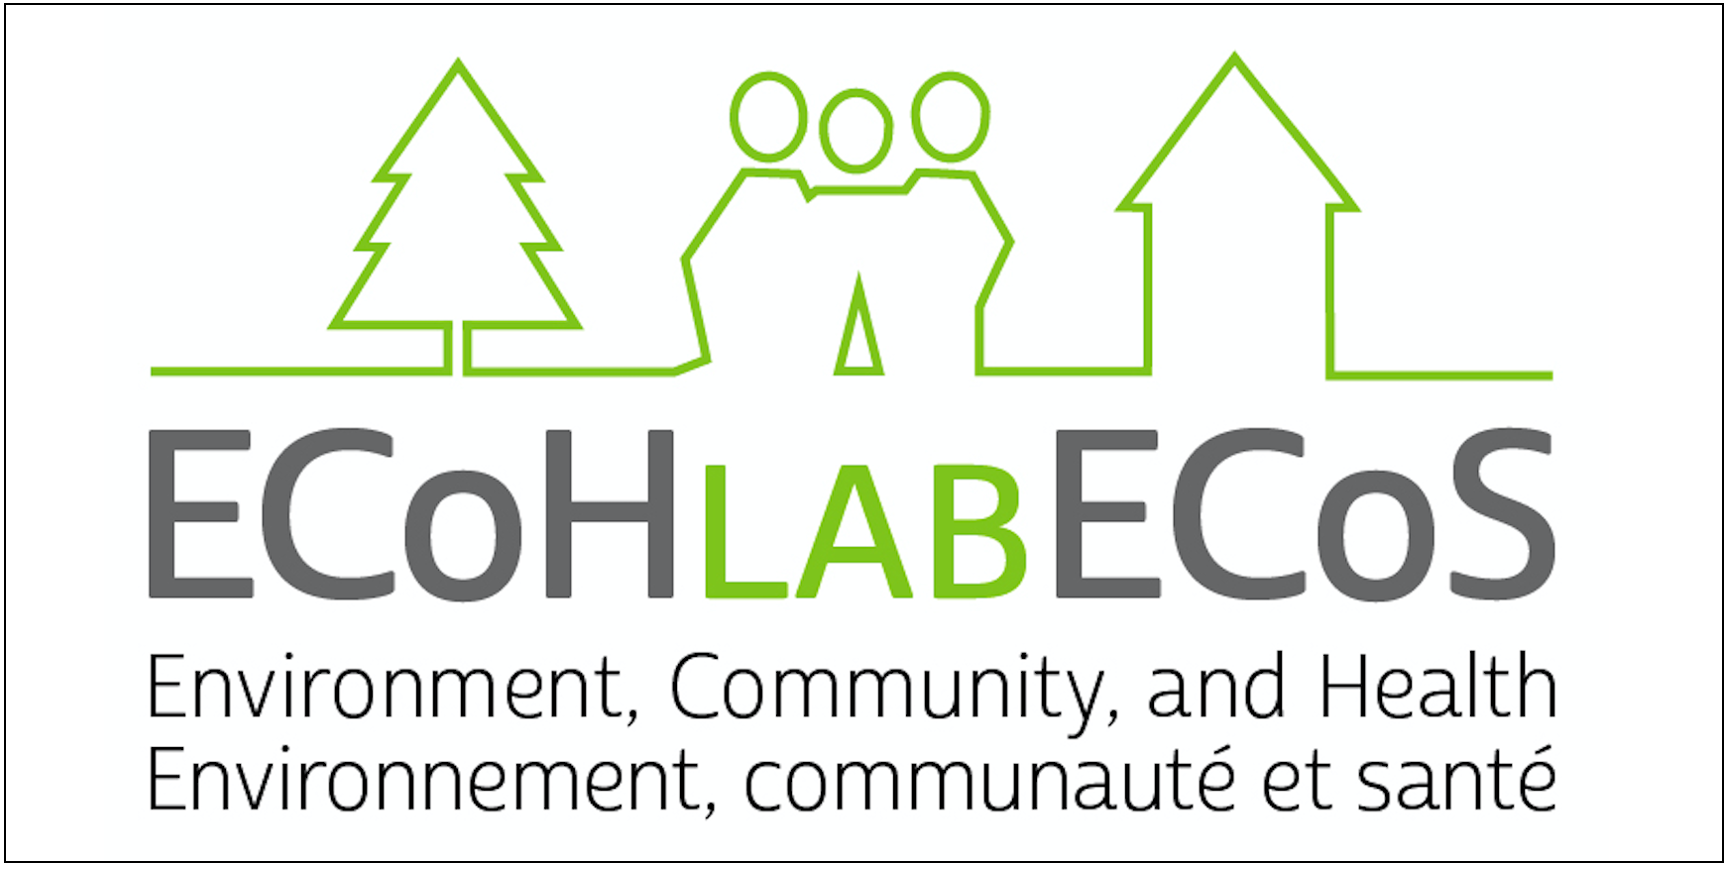 Environment, Community and Health Laboratory logo.